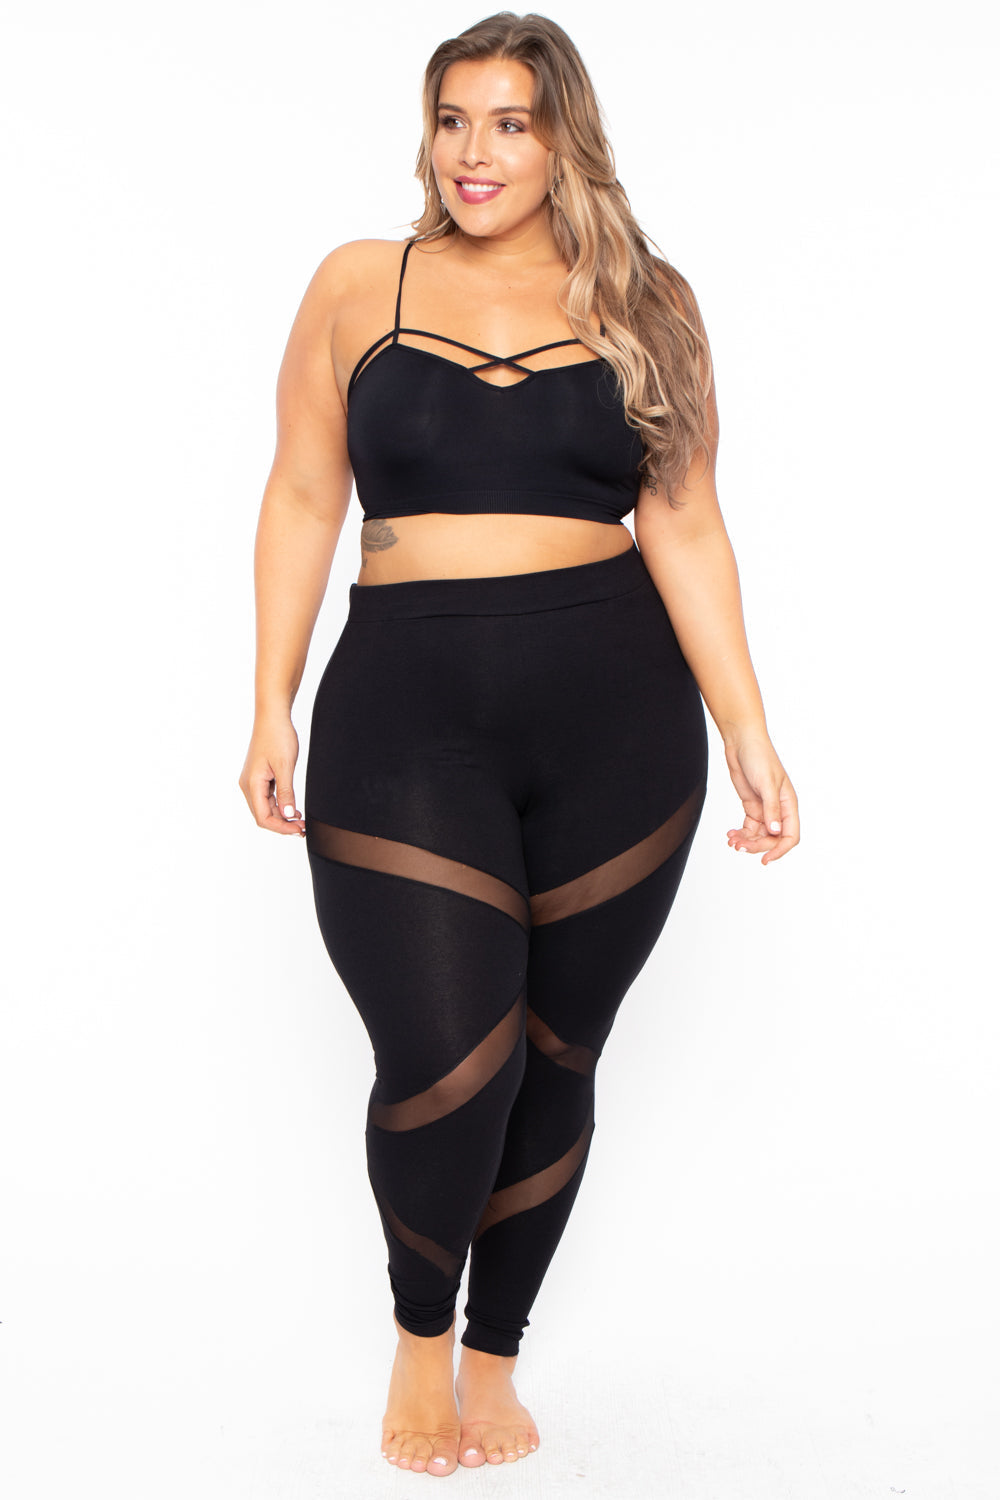 Natopia women's plus-size leggings for curvy bodies